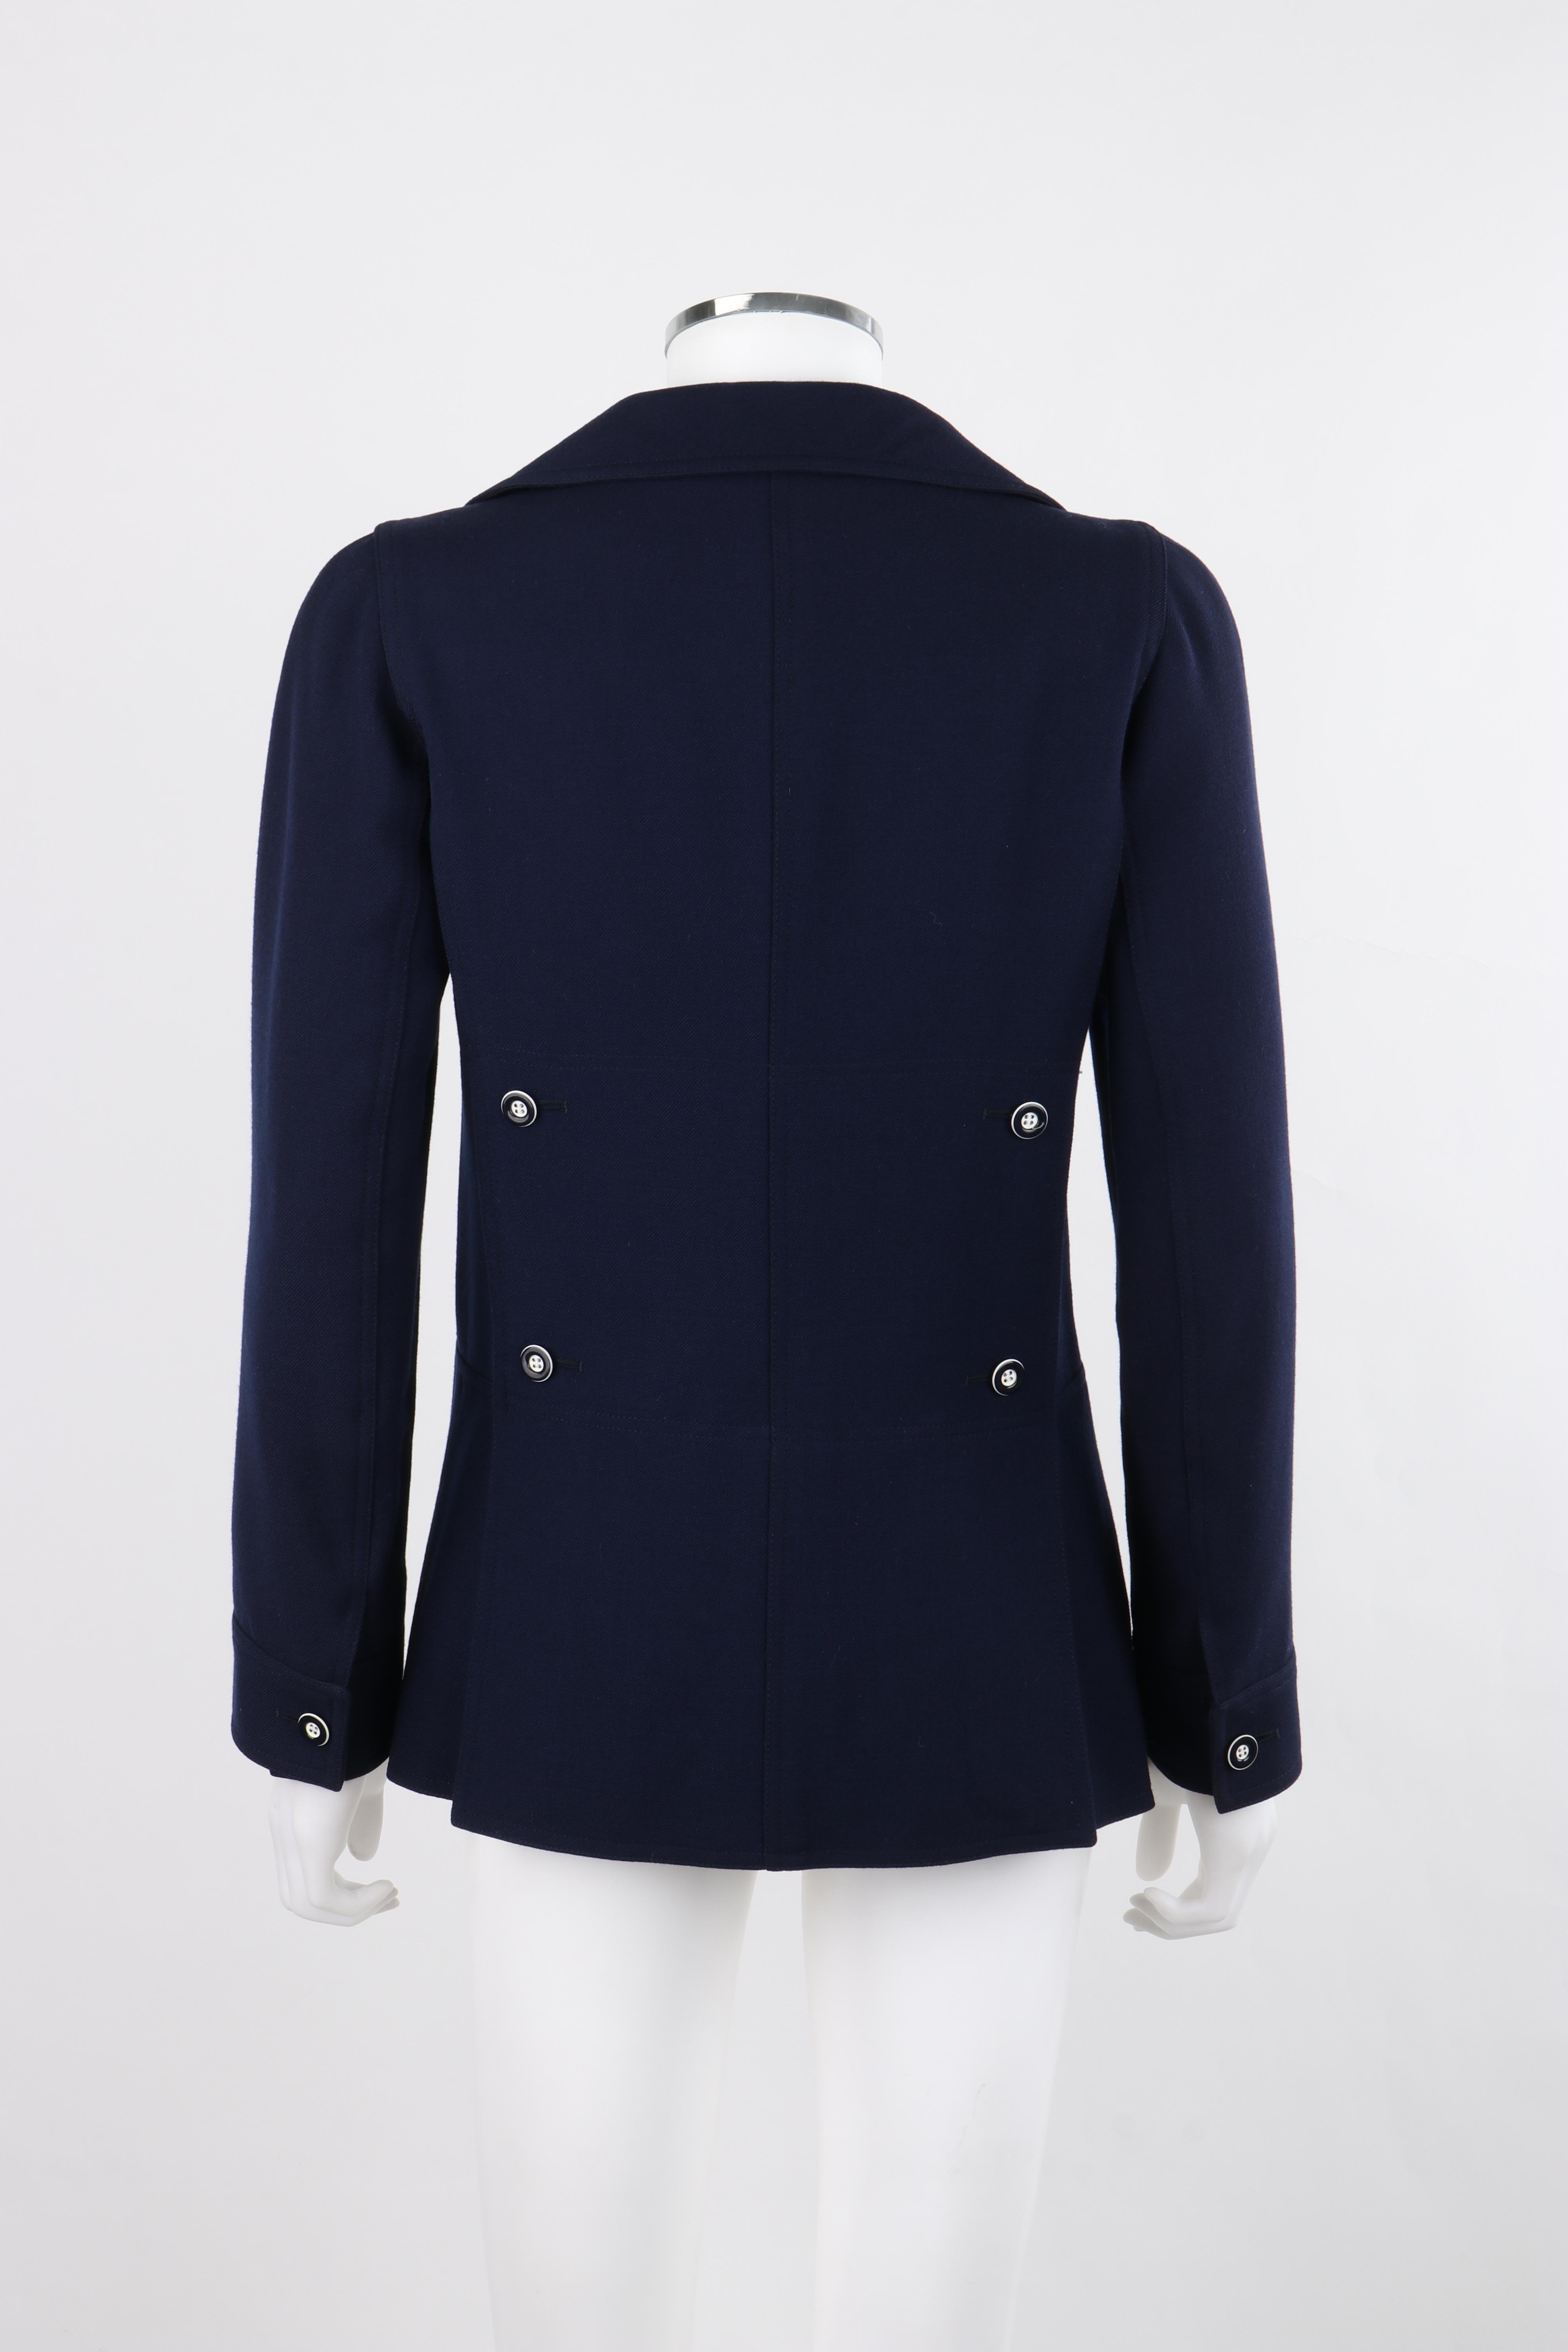 COURREGES PARIS c.1970's Vtg Navy Blue Wool Double Breasted Blazer Jacket  For Sale 1